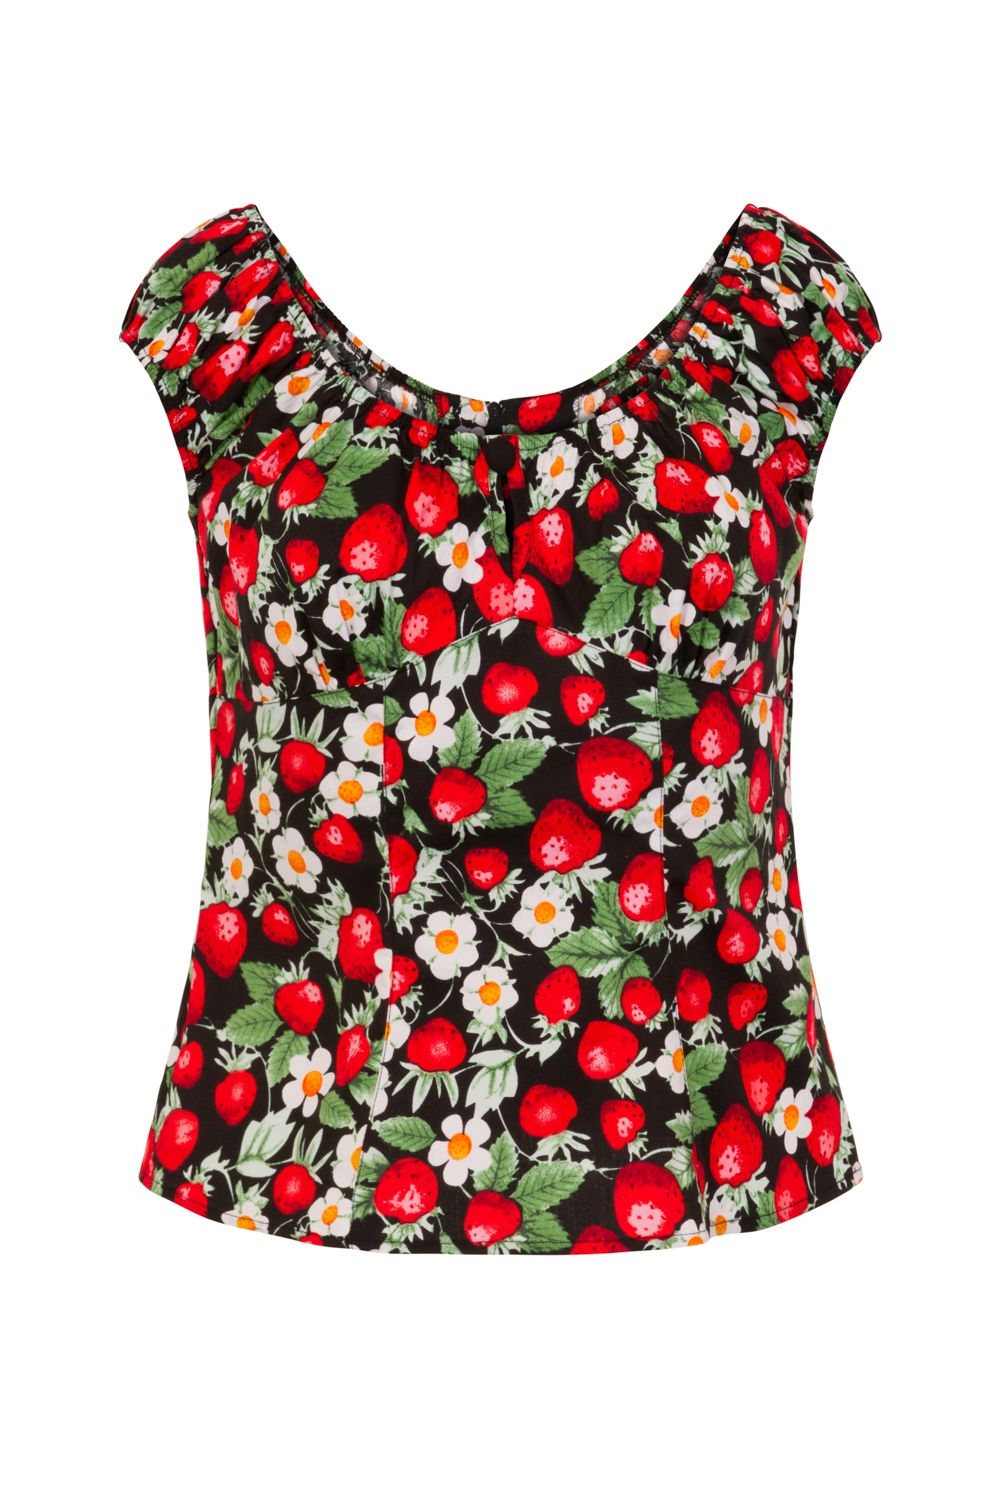 ps6632bb_top-tee-shirt-rockabilly-pin-up-retro-50-s-strawberry-sundae